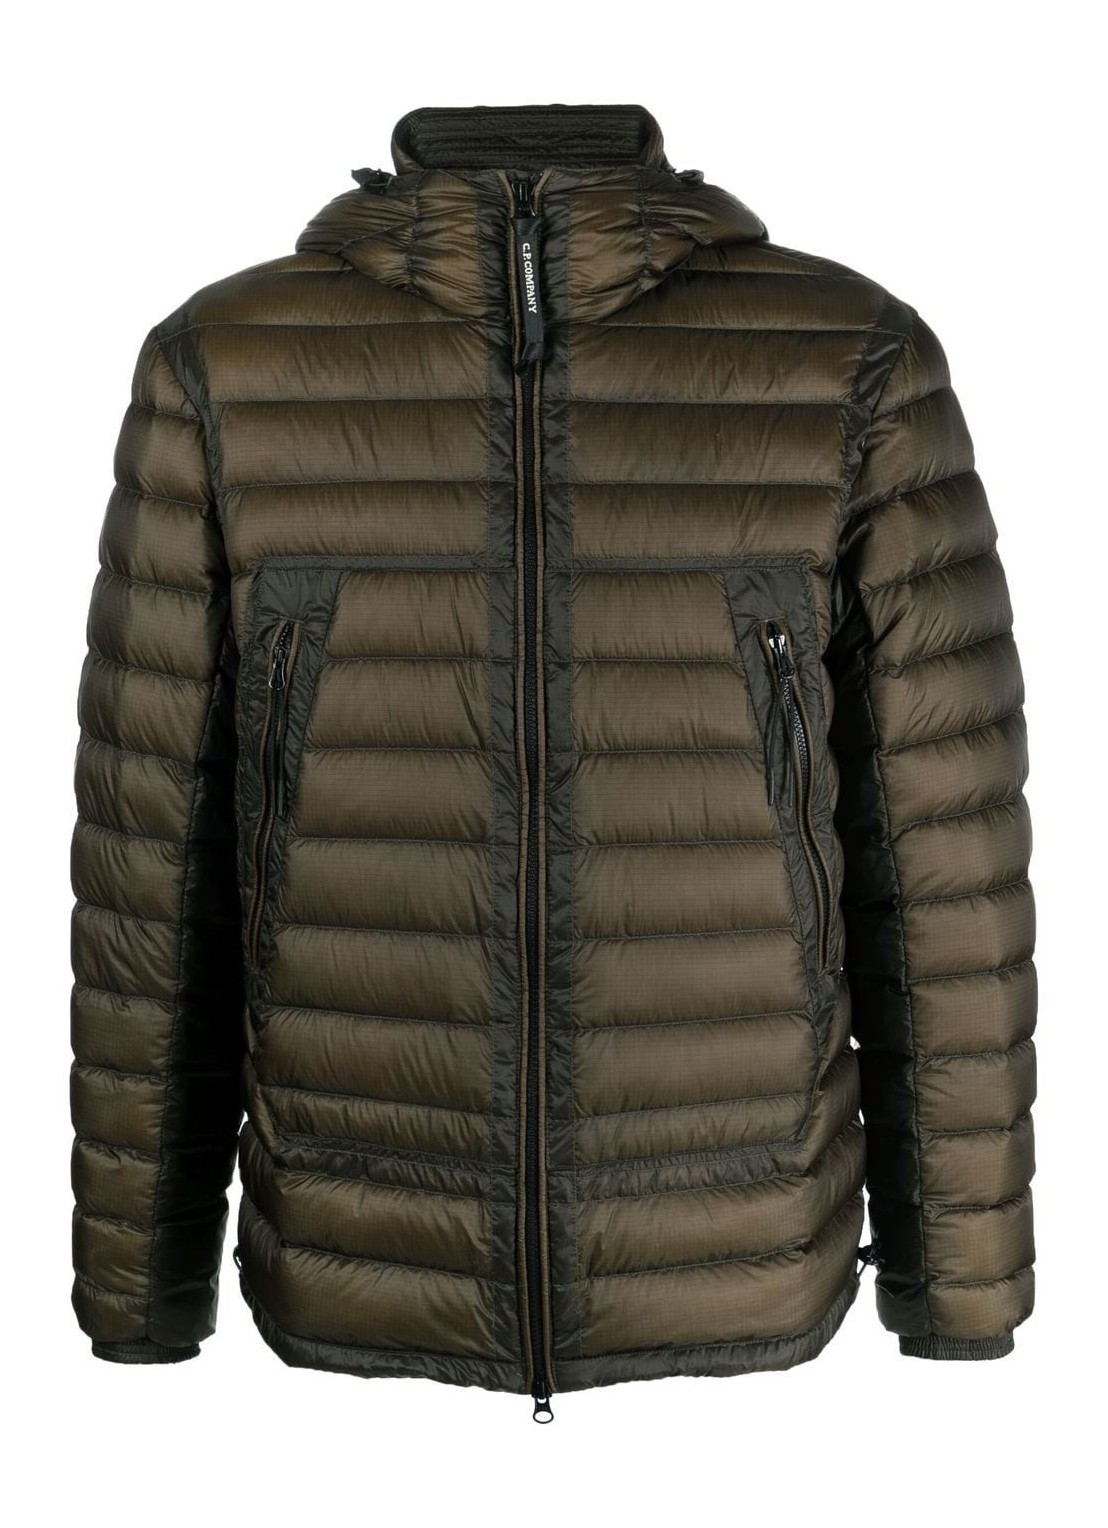 c.p.company outerwear medium jacket in dd shell - 13cmow168a006099a 683 ...